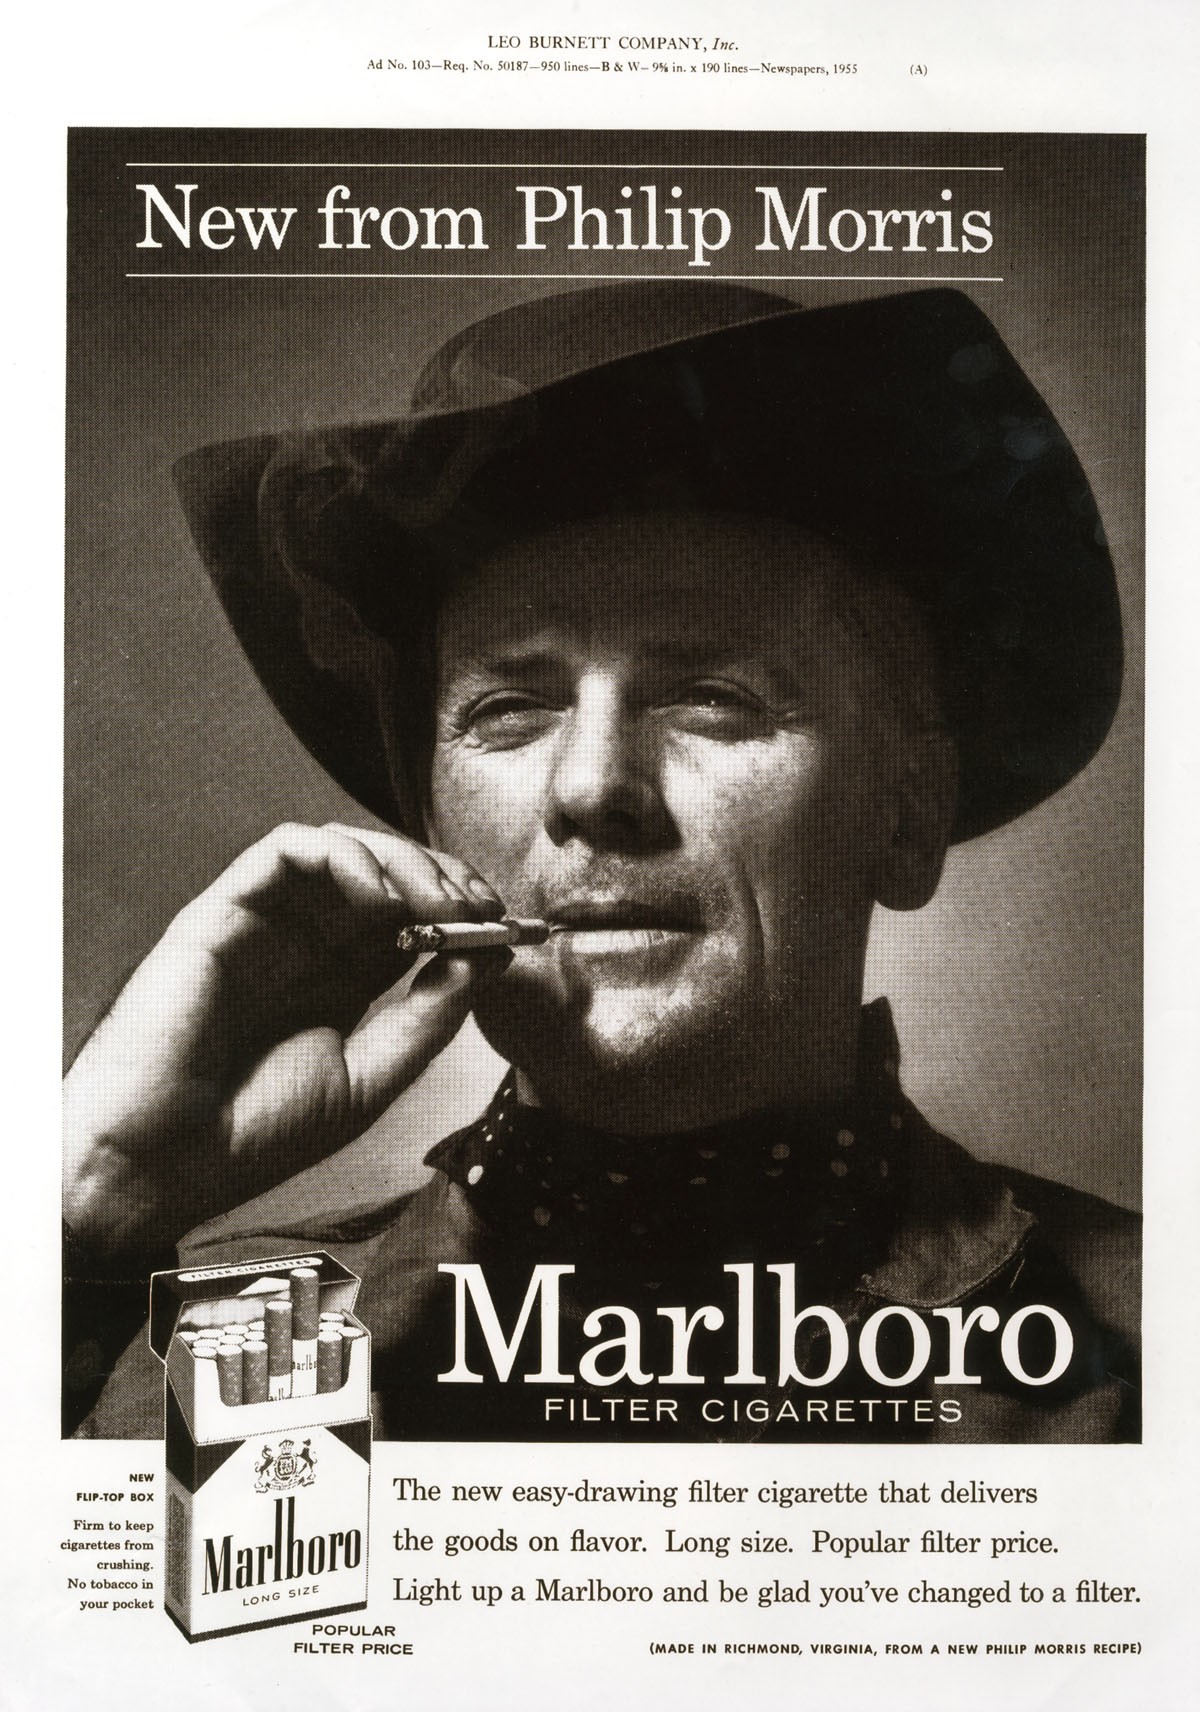 Marlboro advertising